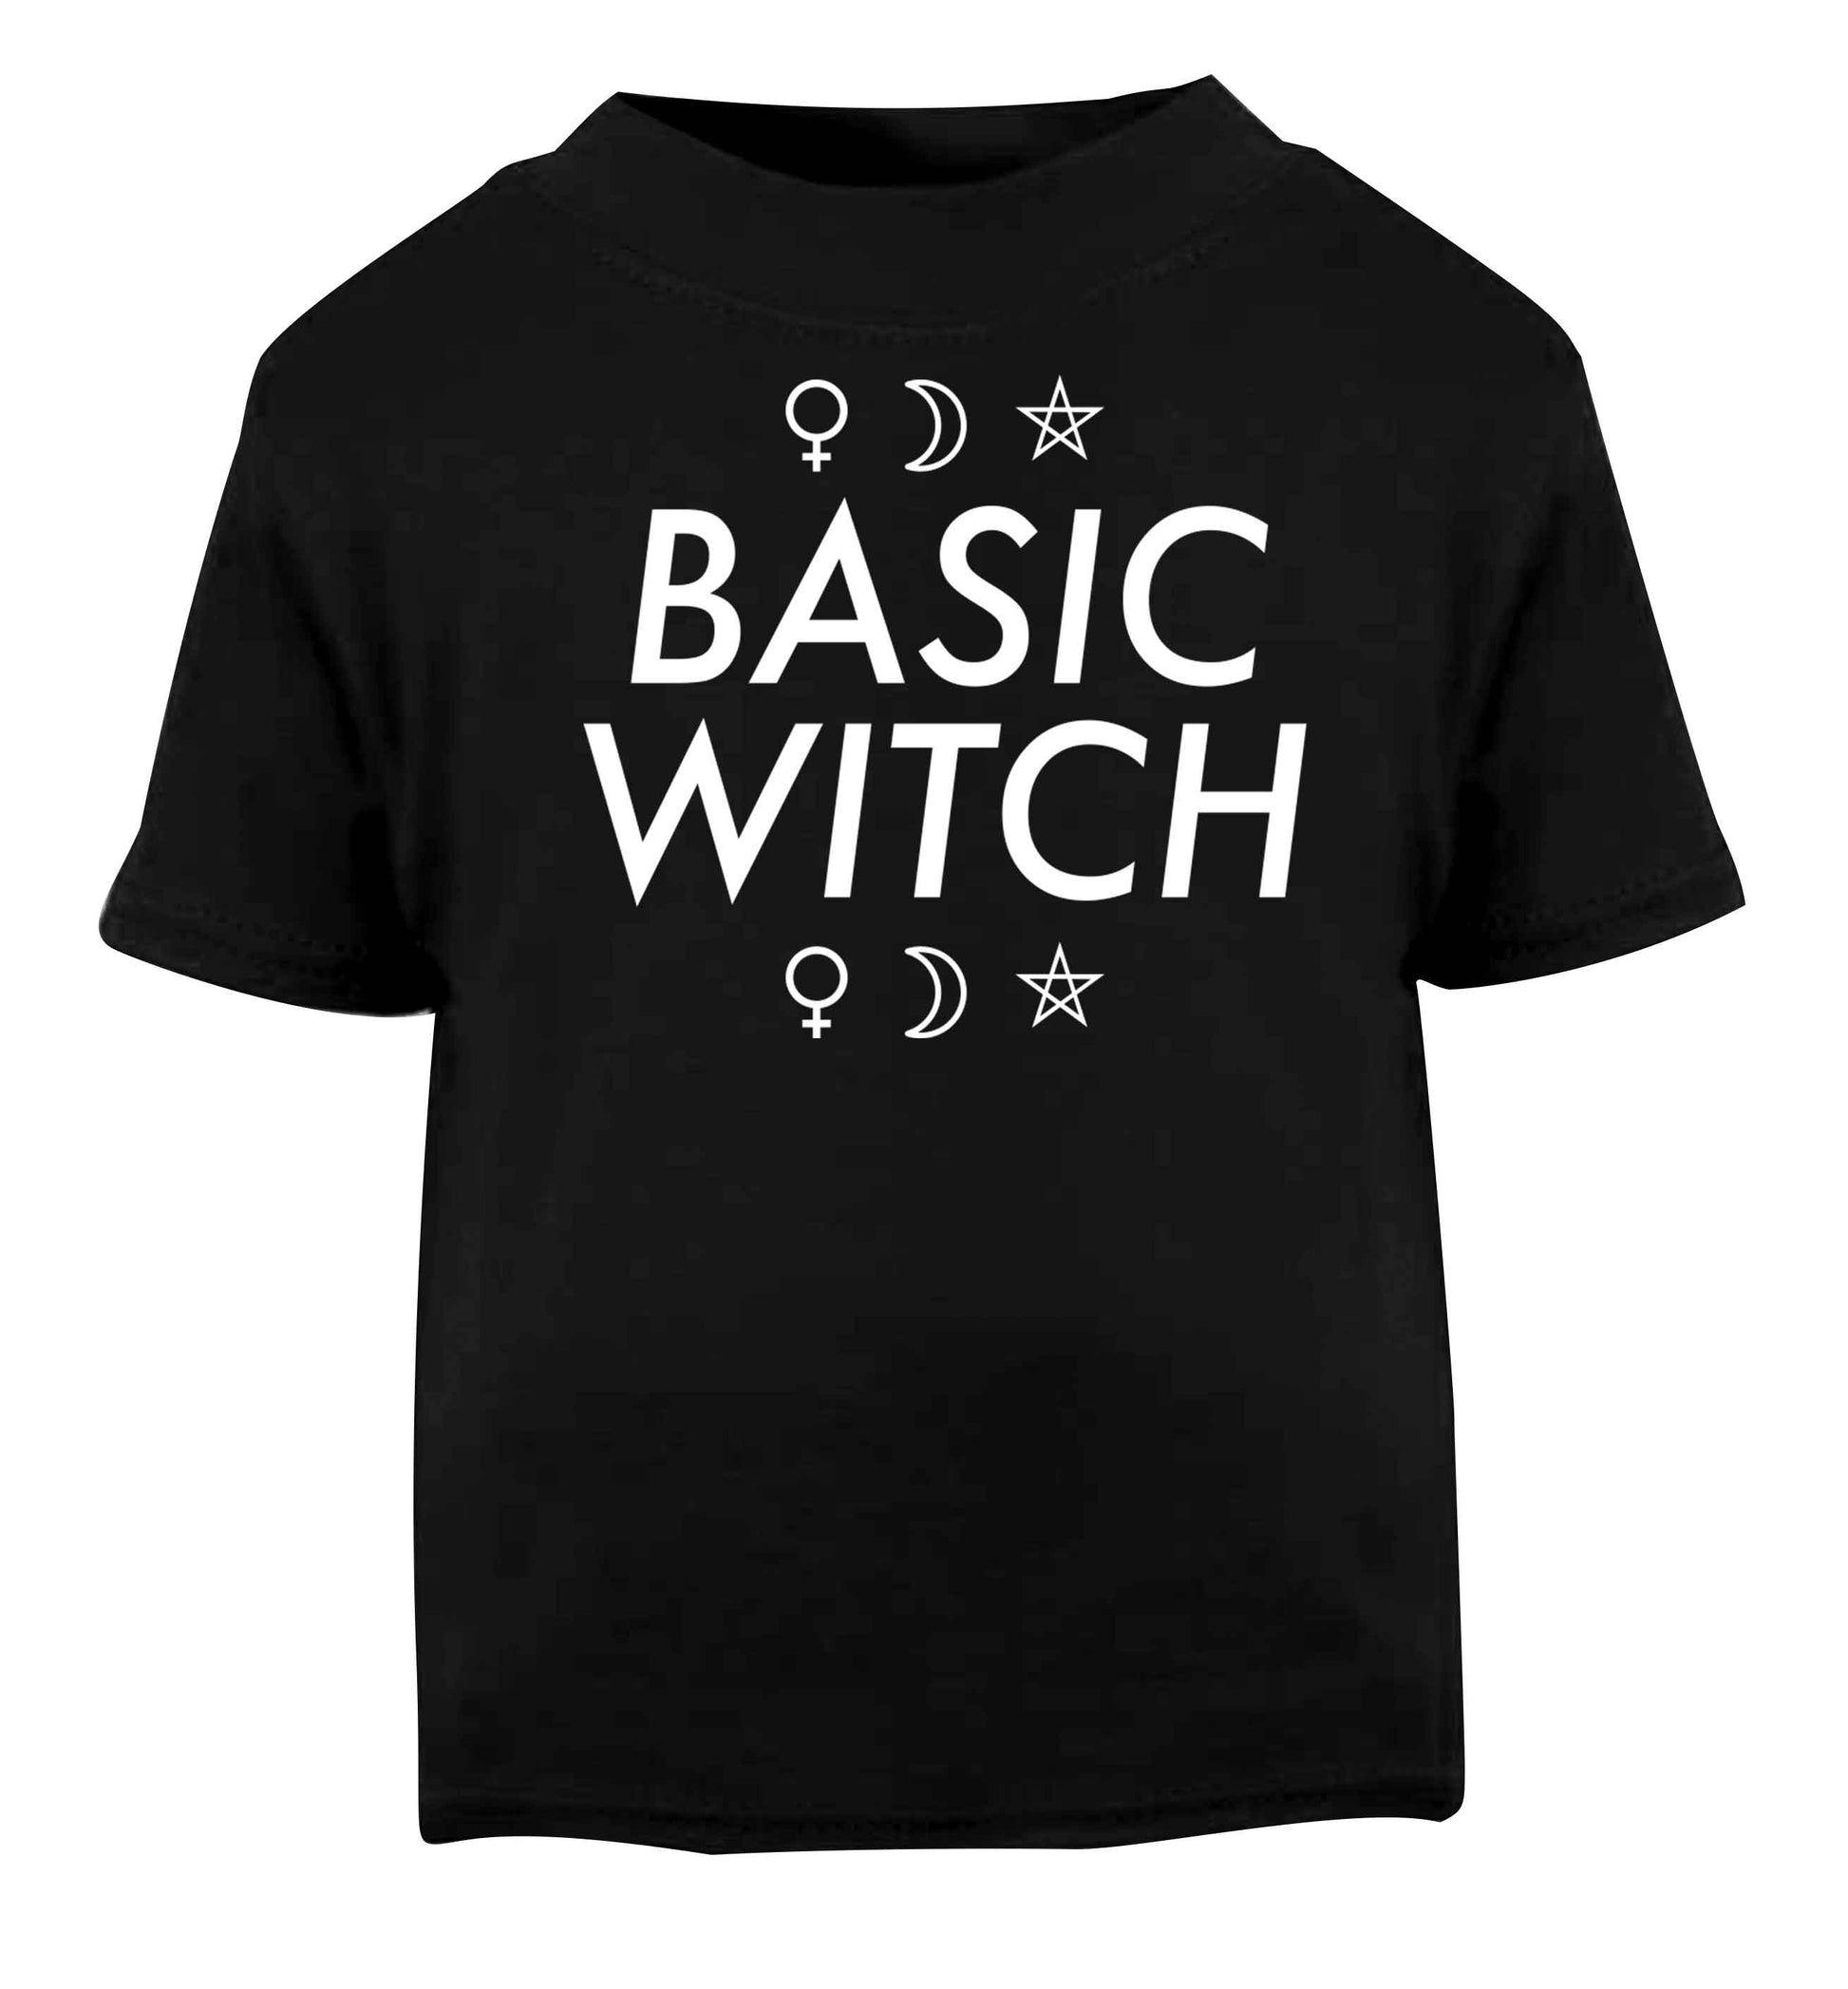 Basic witch 1 Black baby toddler Tshirt 2 years